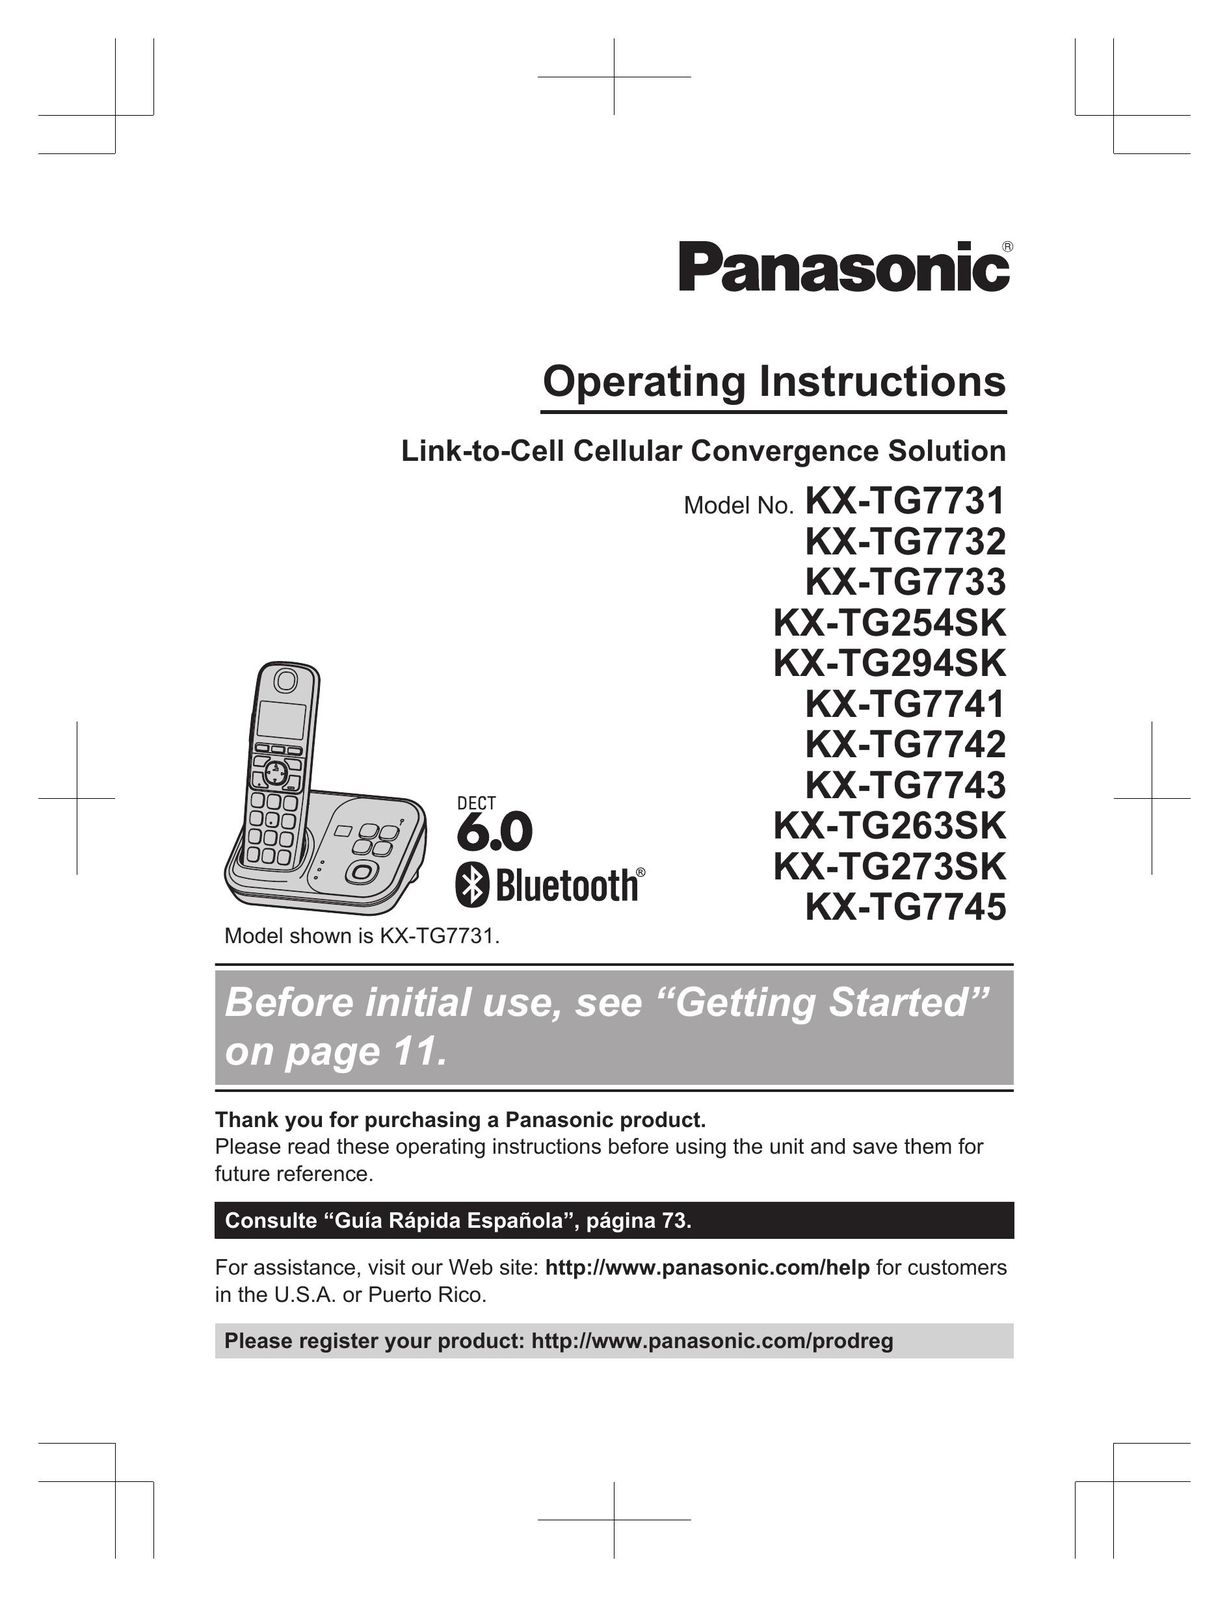 Panasonic KX-TG7732 Carrying Case User Manual